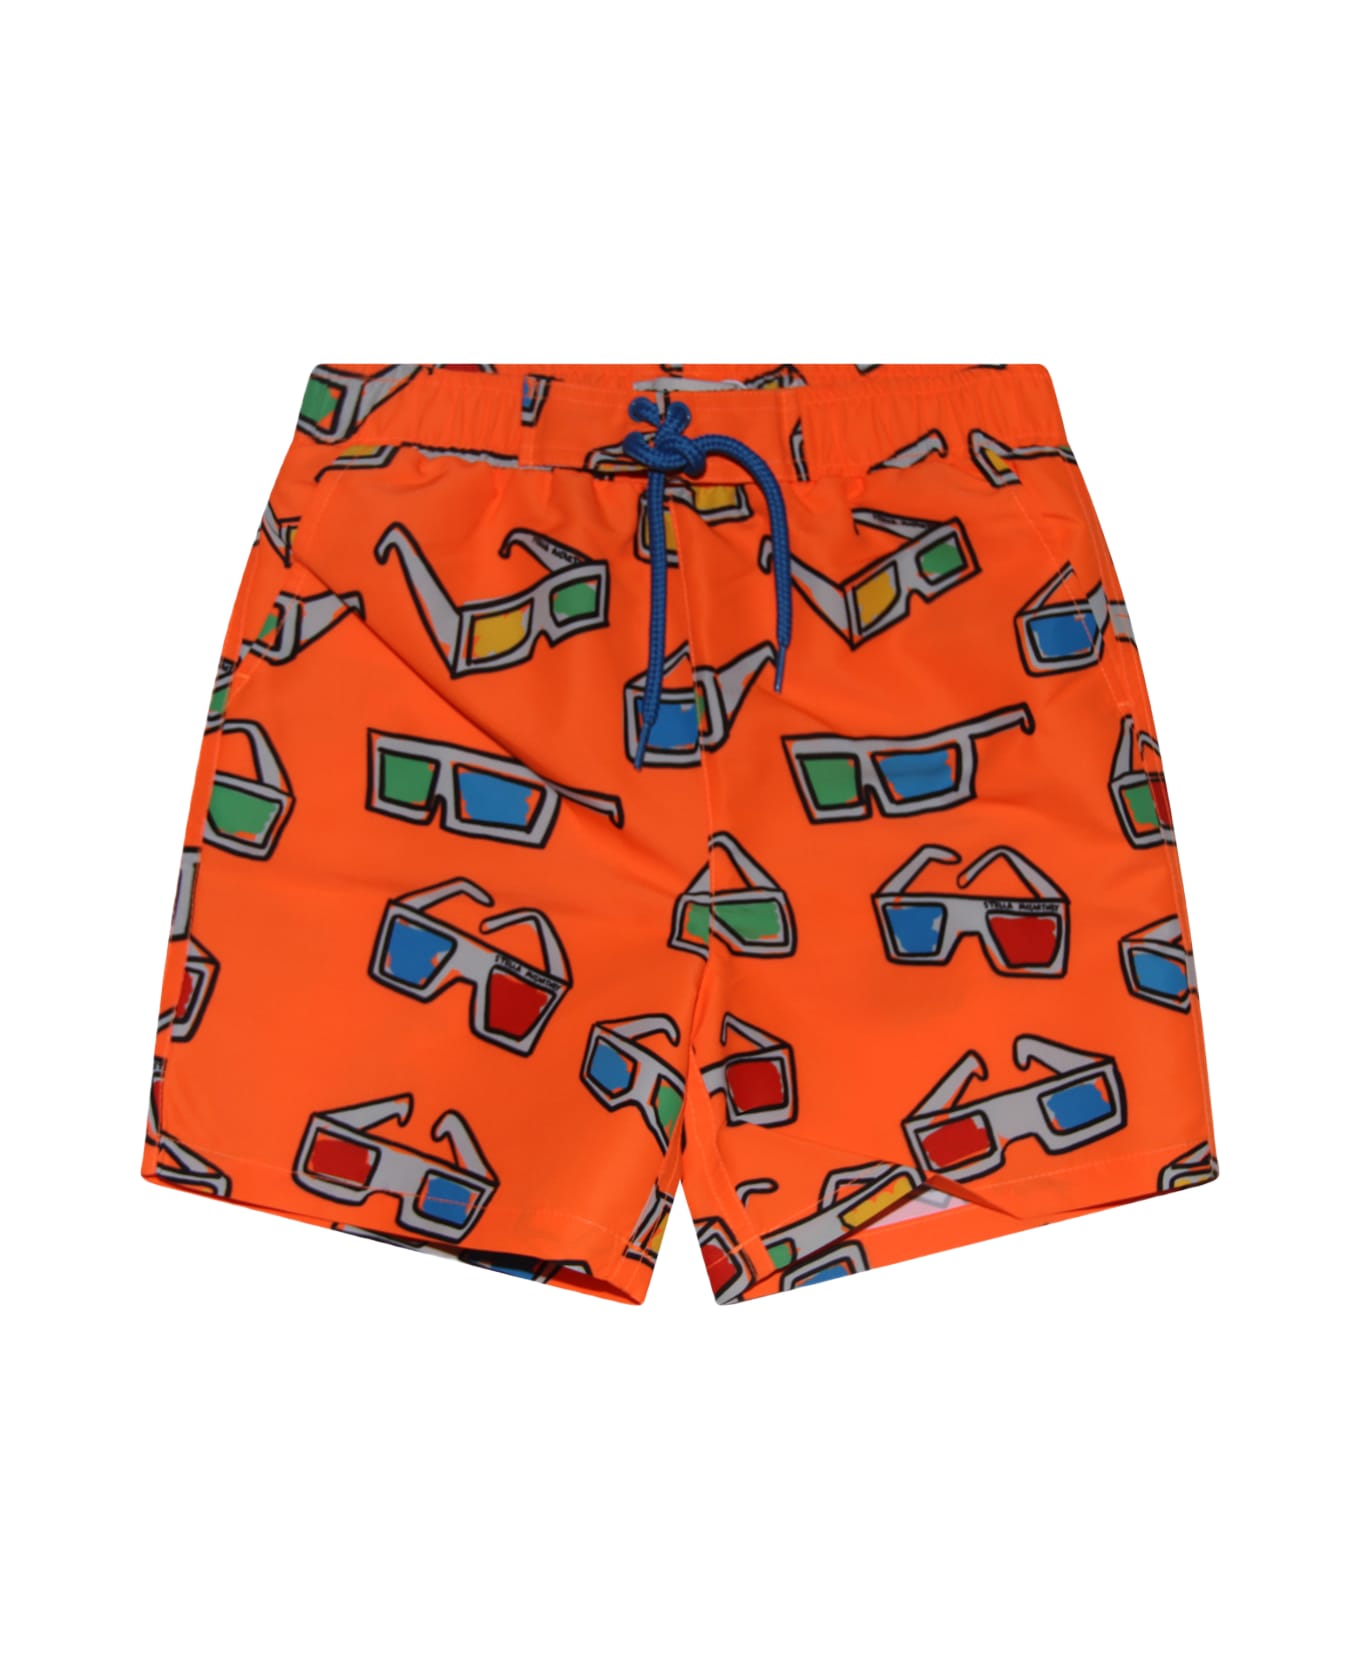 Stella McCartney Orange Multicolour Swim Shorts - ARANCIO/MULTI